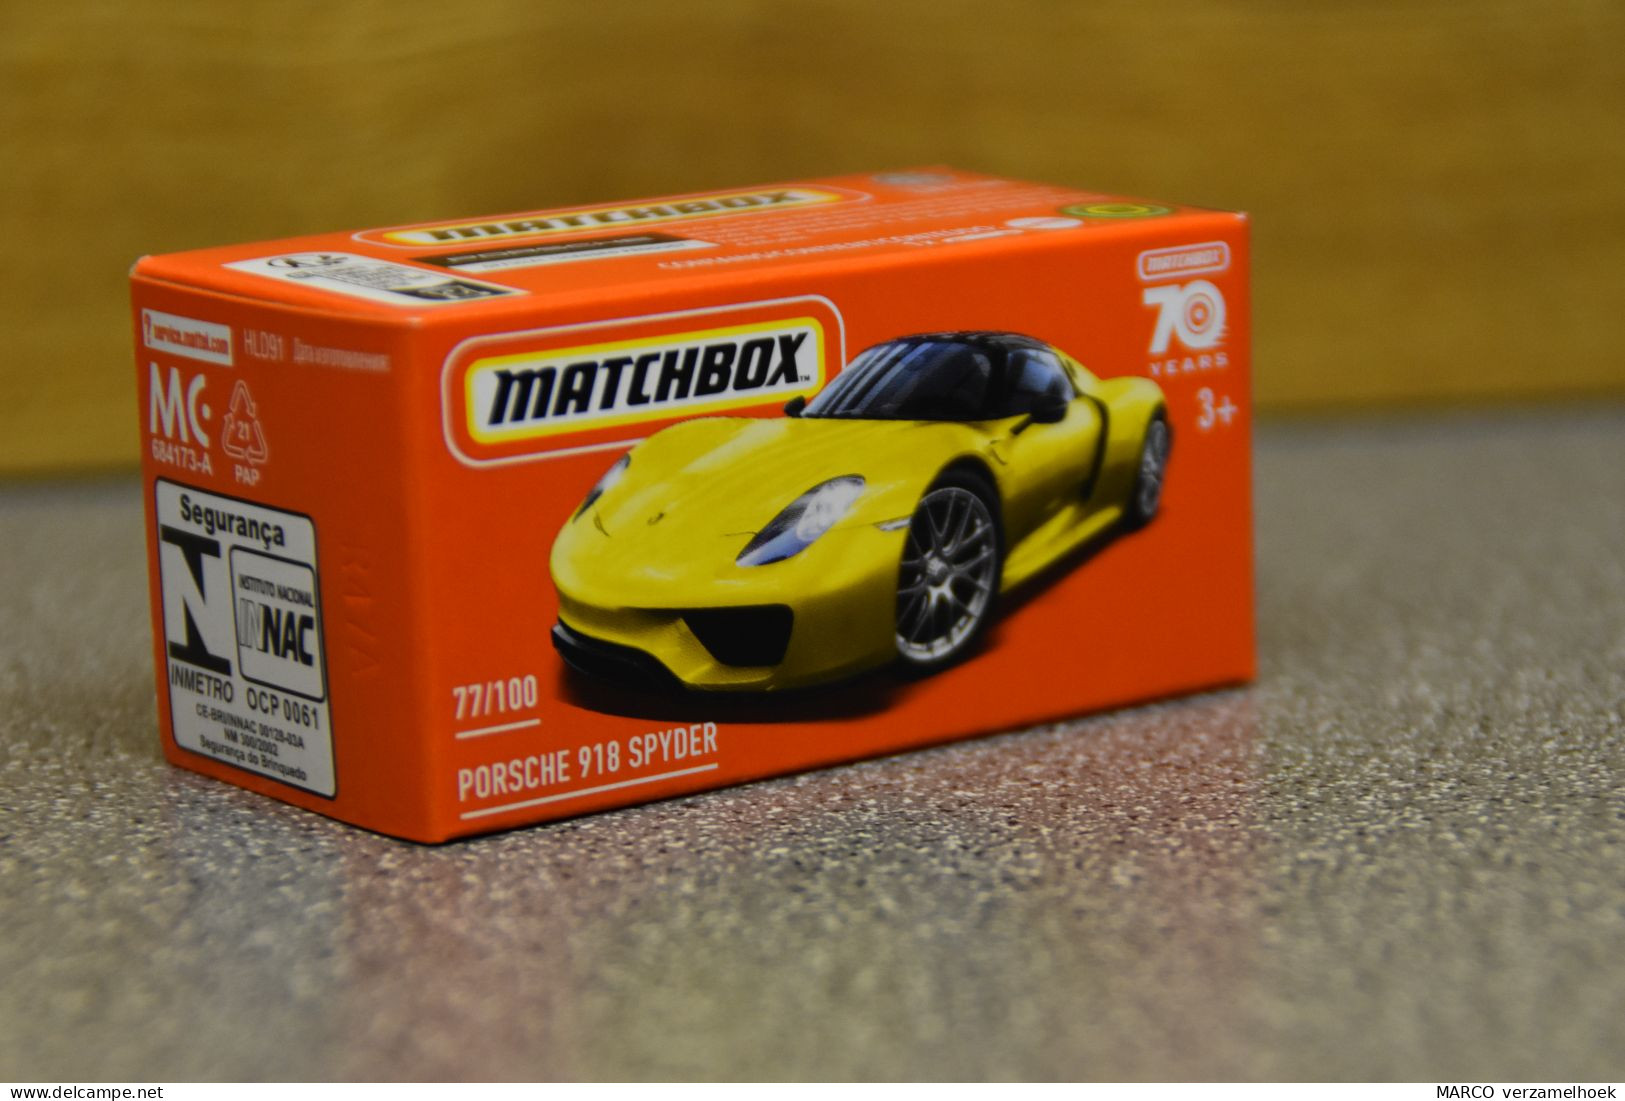 Mattel - Matchbox 70 Years 77/100 Porsche 918 Spider - Matchbox (Mattel)